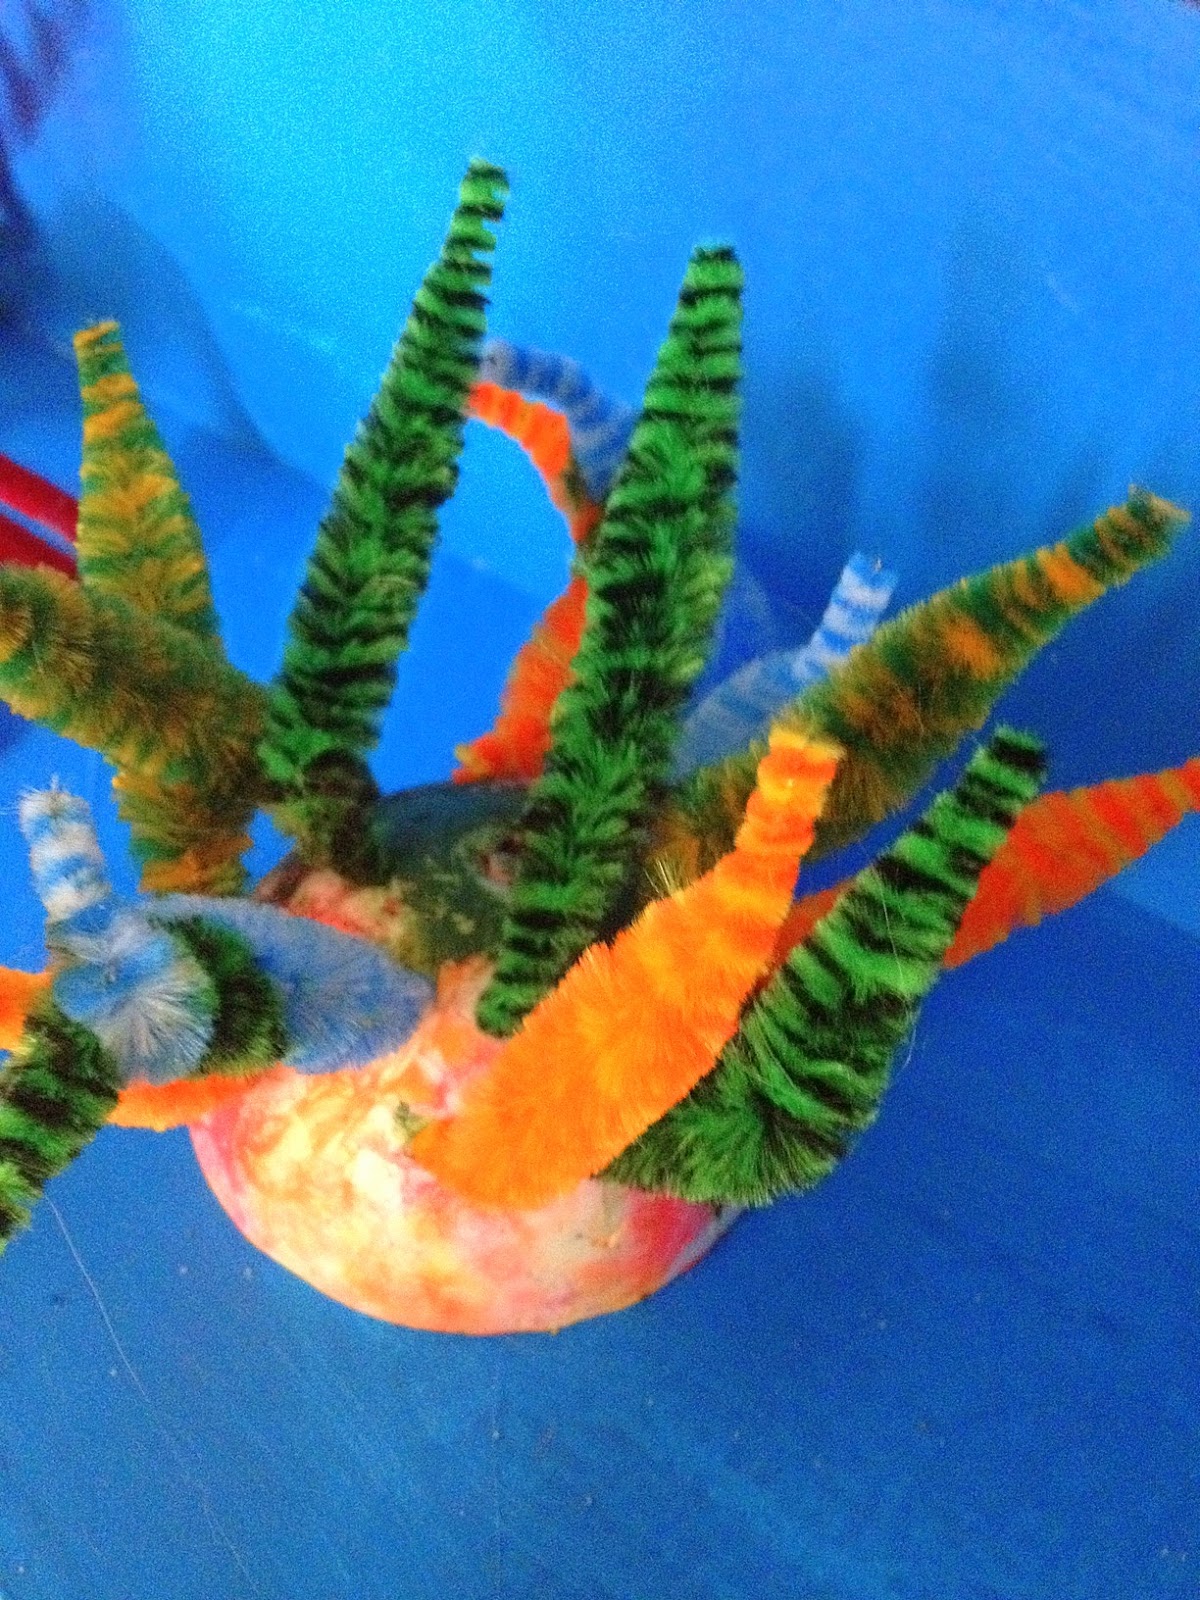 Our Worldwide Classroom: Ten Easy Ocean Diorama Crafts